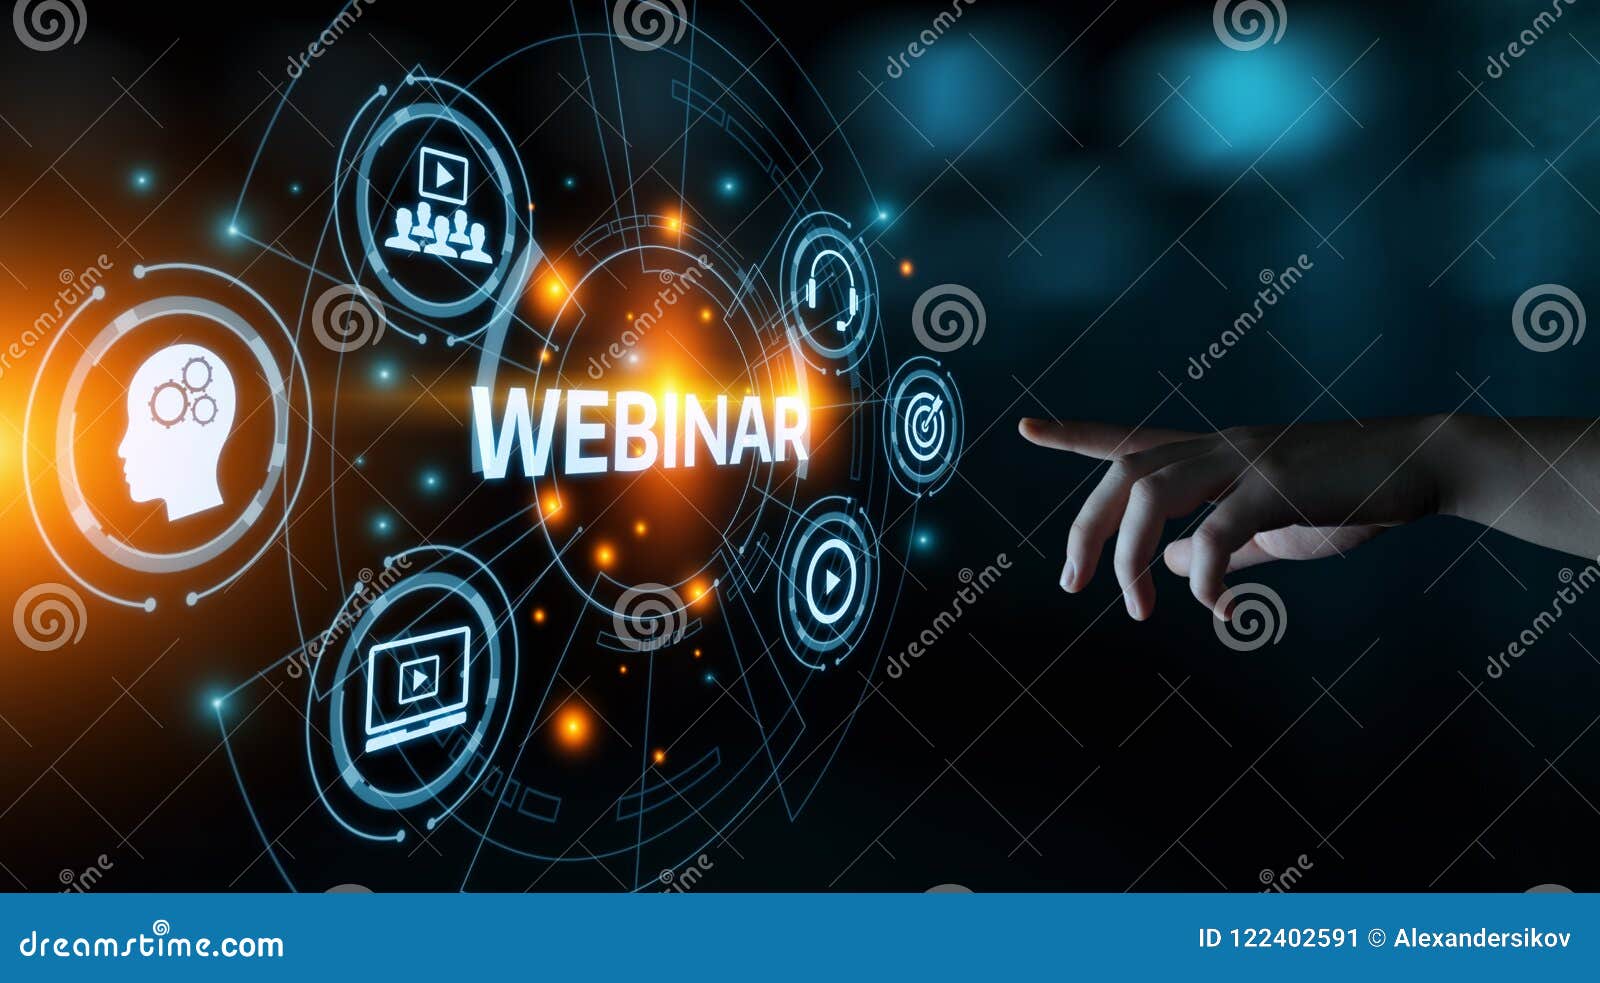 webinar e-learning training business internet technology concept